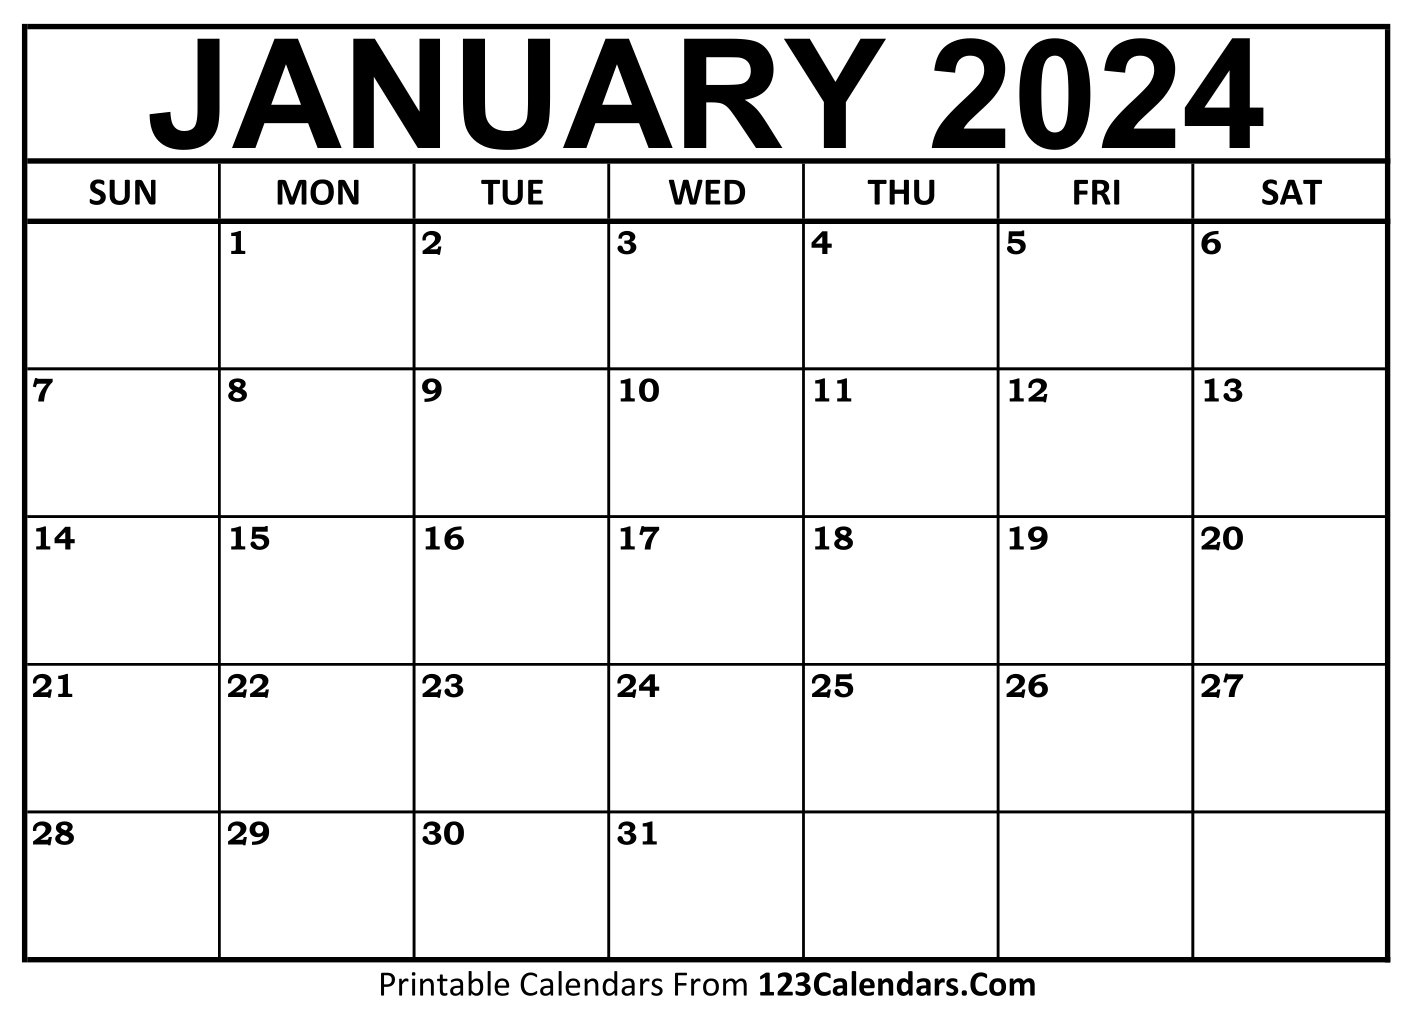 Printable January 2024 Calendar Templates - 123Calendars | Printable 2024 January Calendar